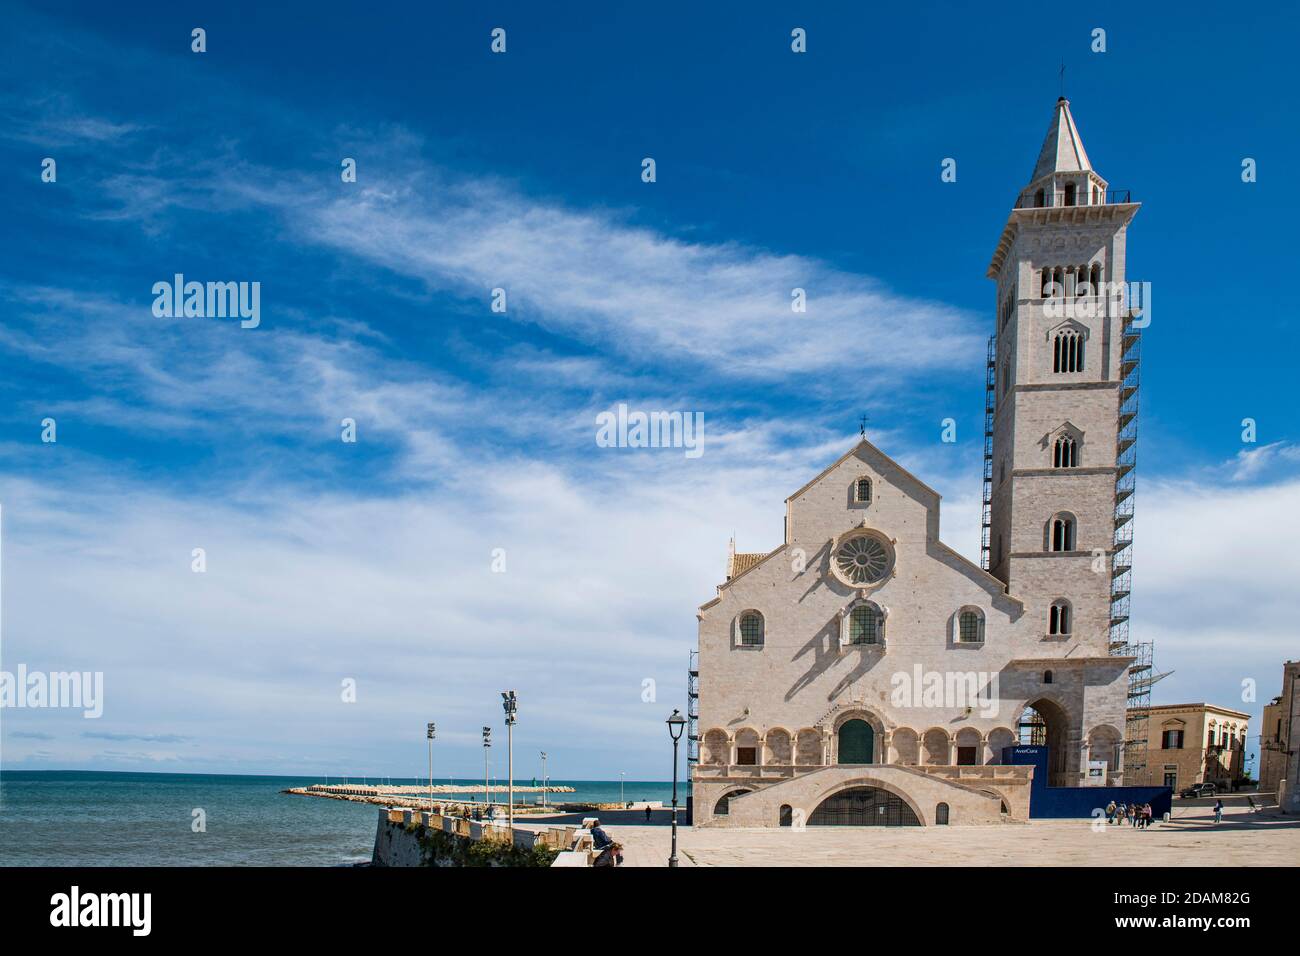 Cathedral of Santa Maria Assunta, Trani, Bari, Puglia, Italy. It was built using Trani stone, a building material typical of the area. Stock Photo